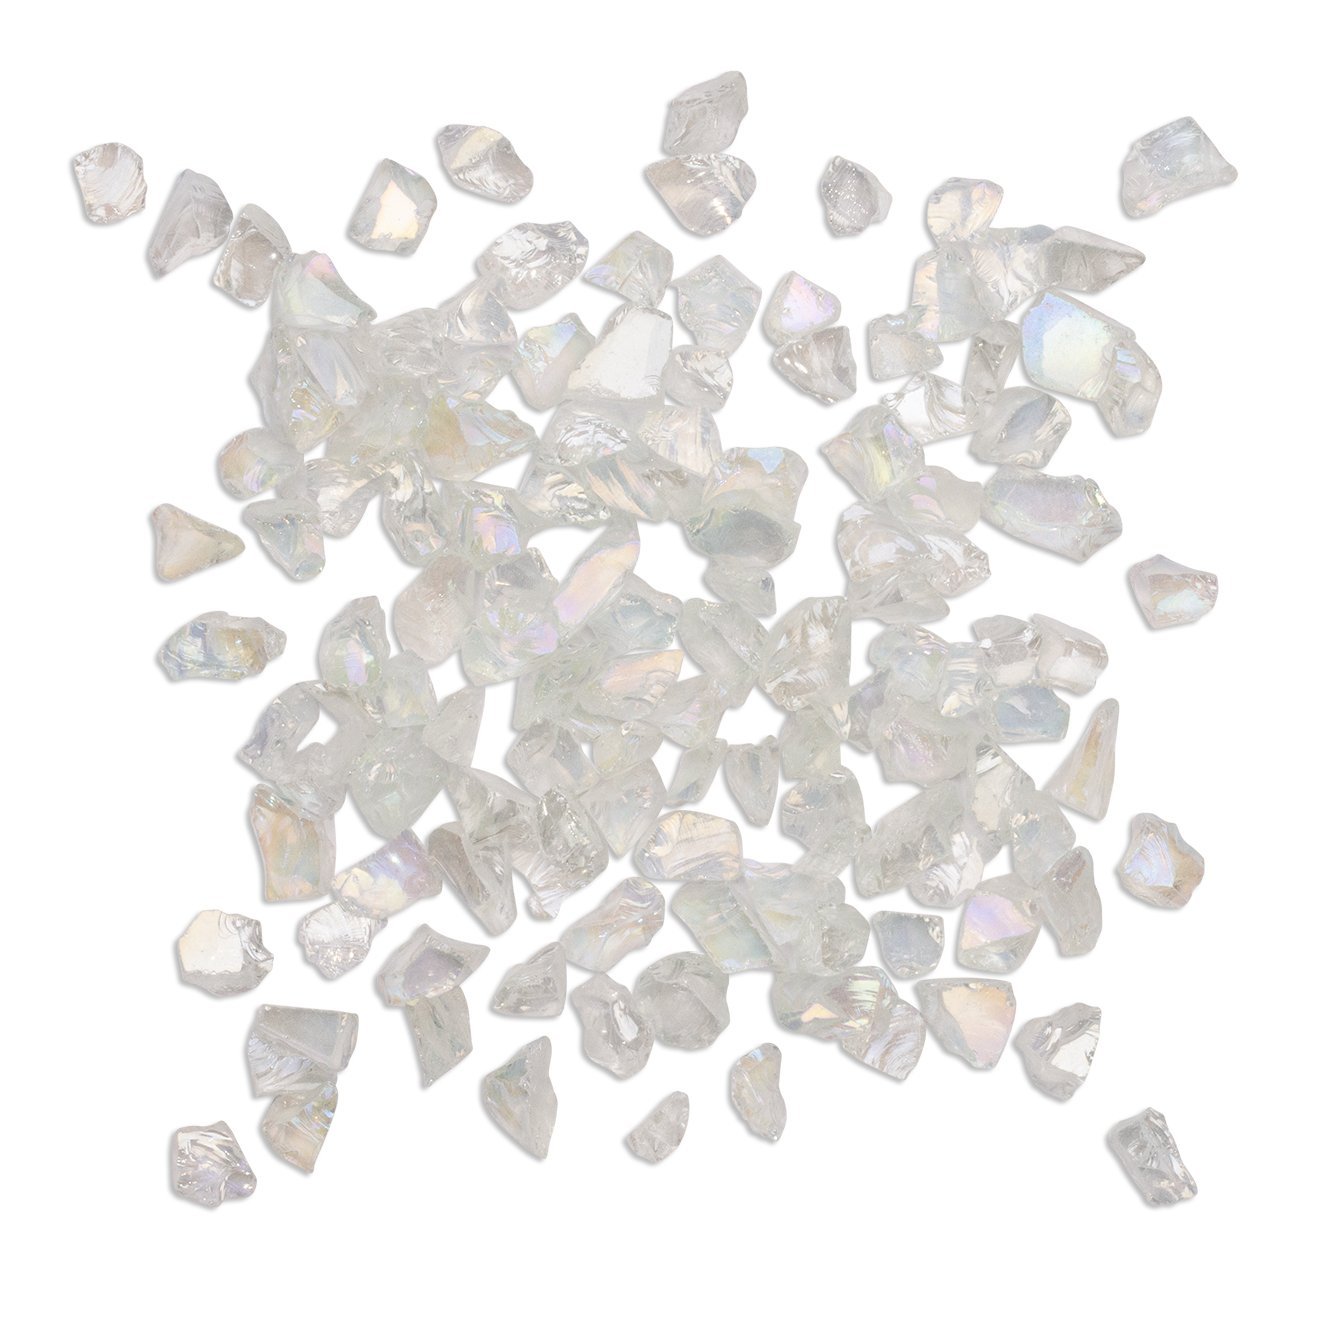 Opal Crushed Glass 135g - CRAFT2U